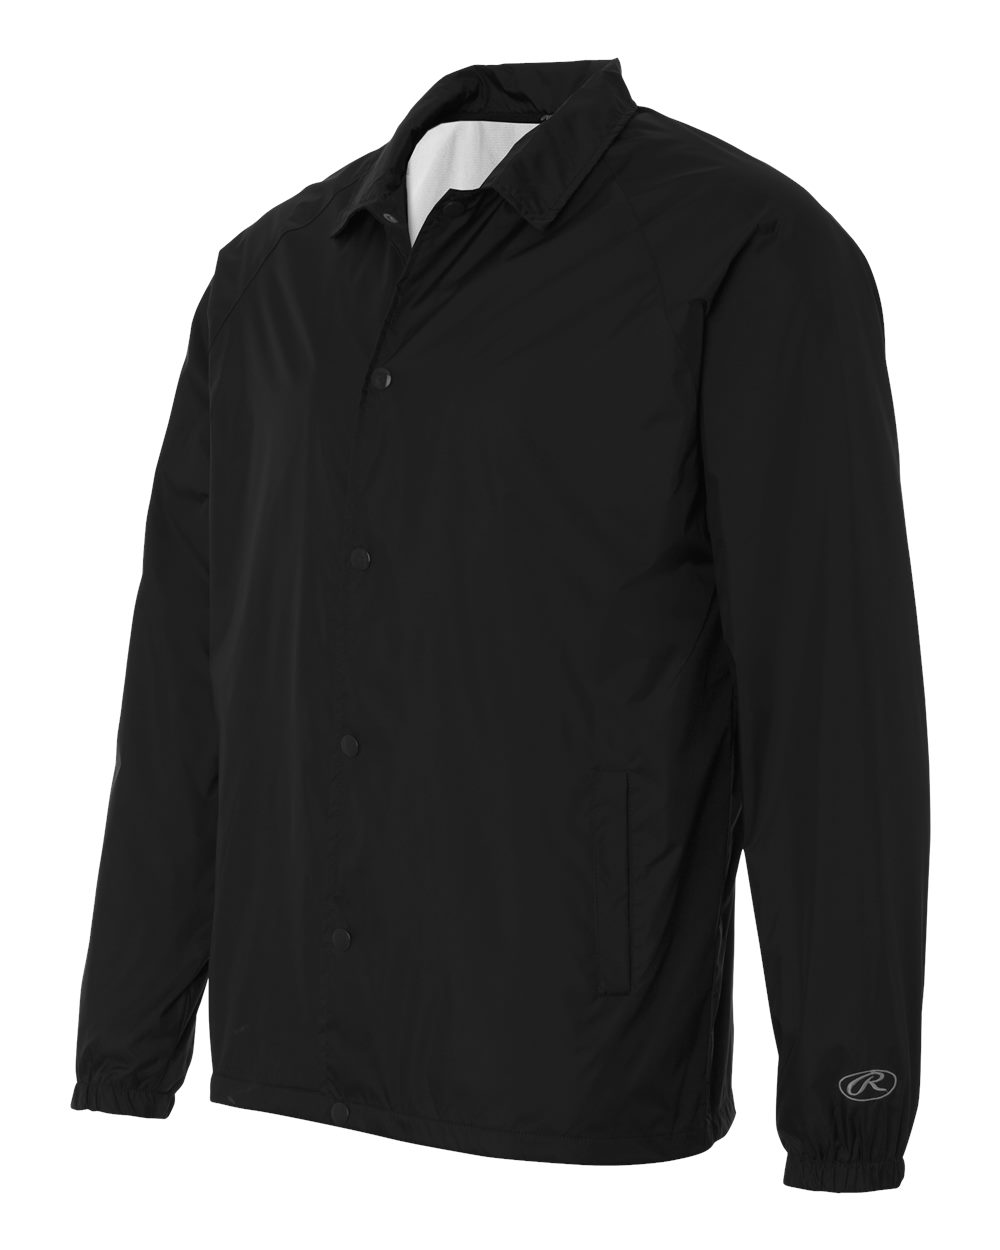 Rawlings 9718 - Nylon Coach's Jacket